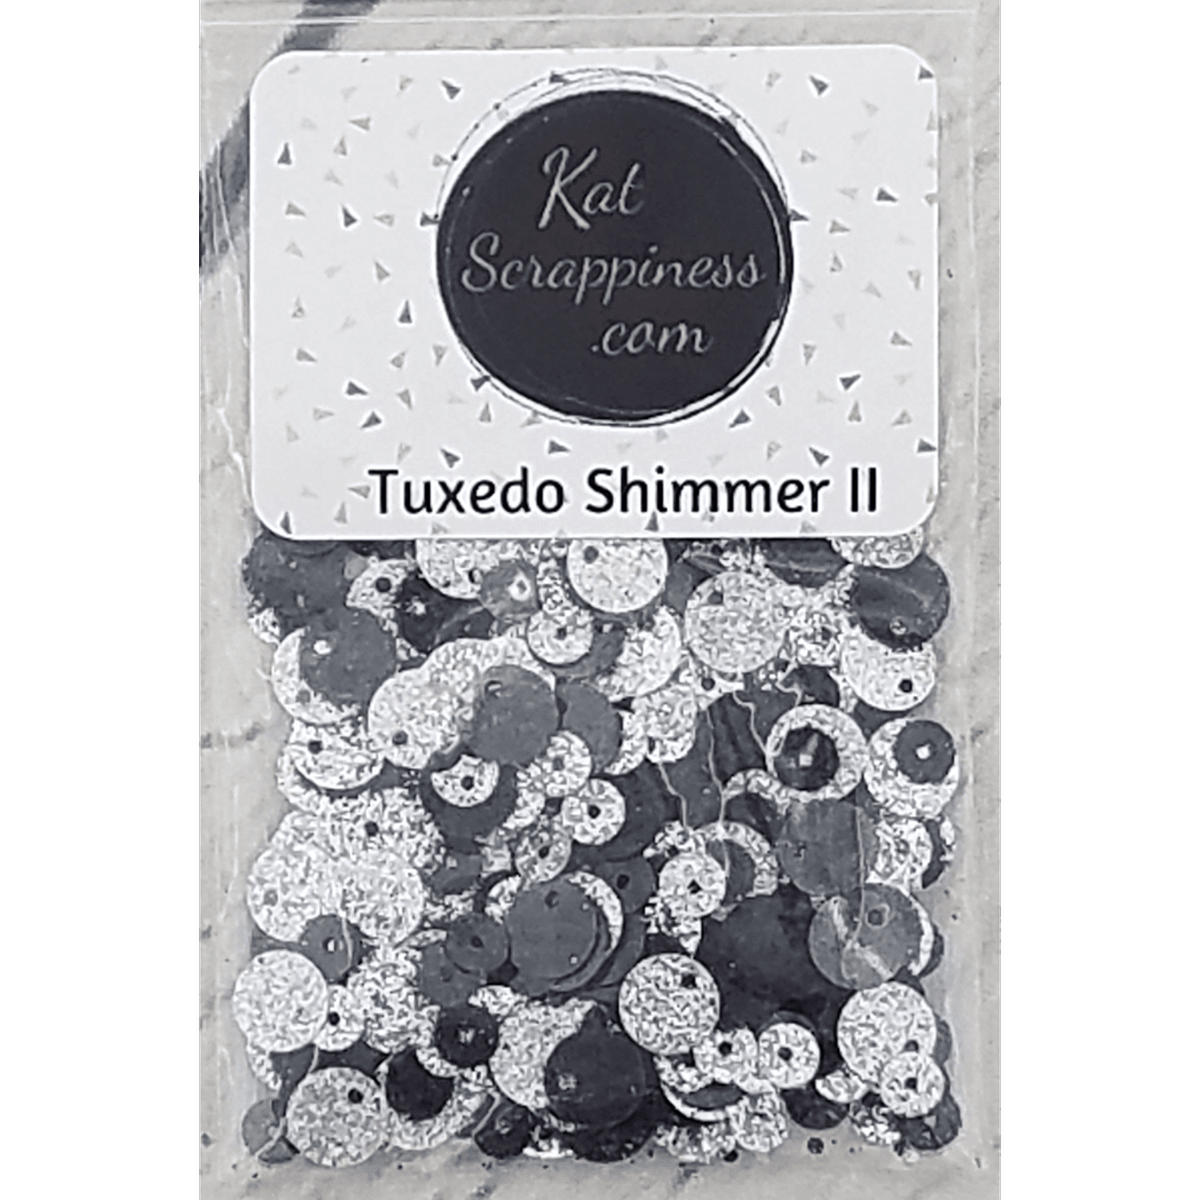 Tuxedo Shimmer II Sequin Mix - Kat Scrappiness